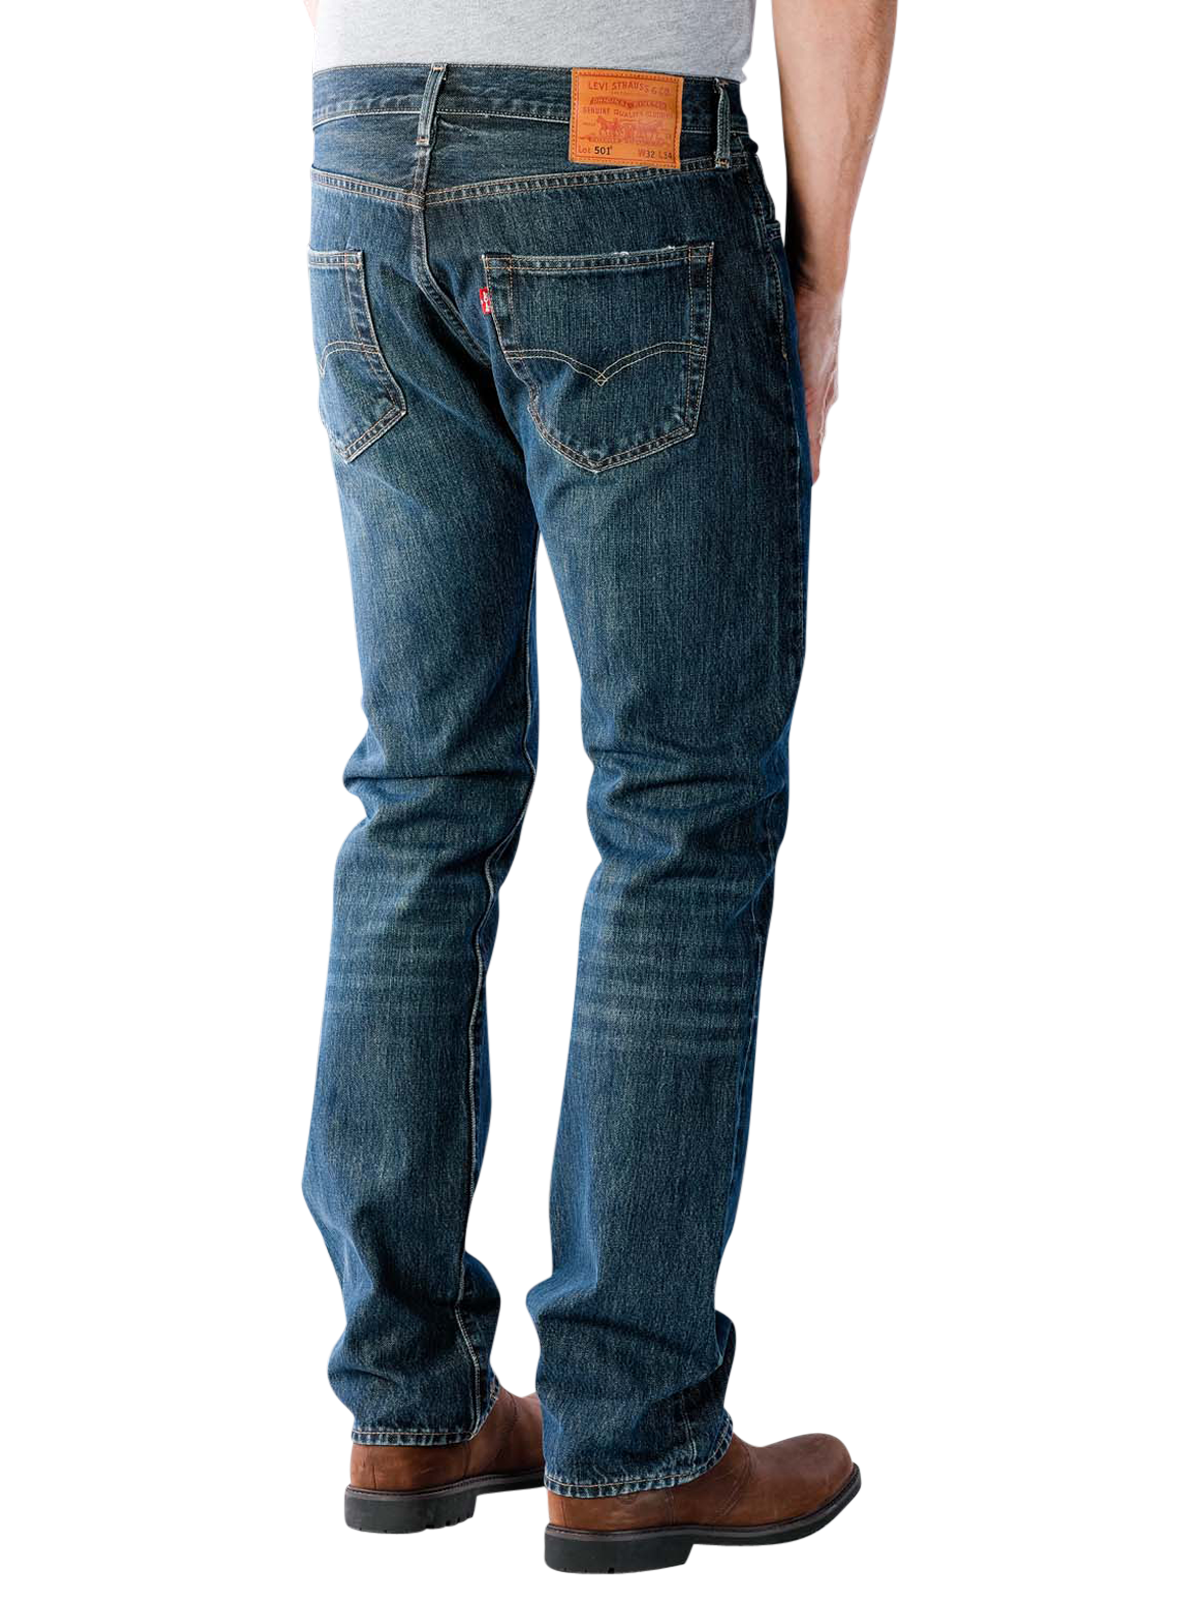 Levis 501 Jeans Straight snoot  Gratis Lieferung  JEANSCH